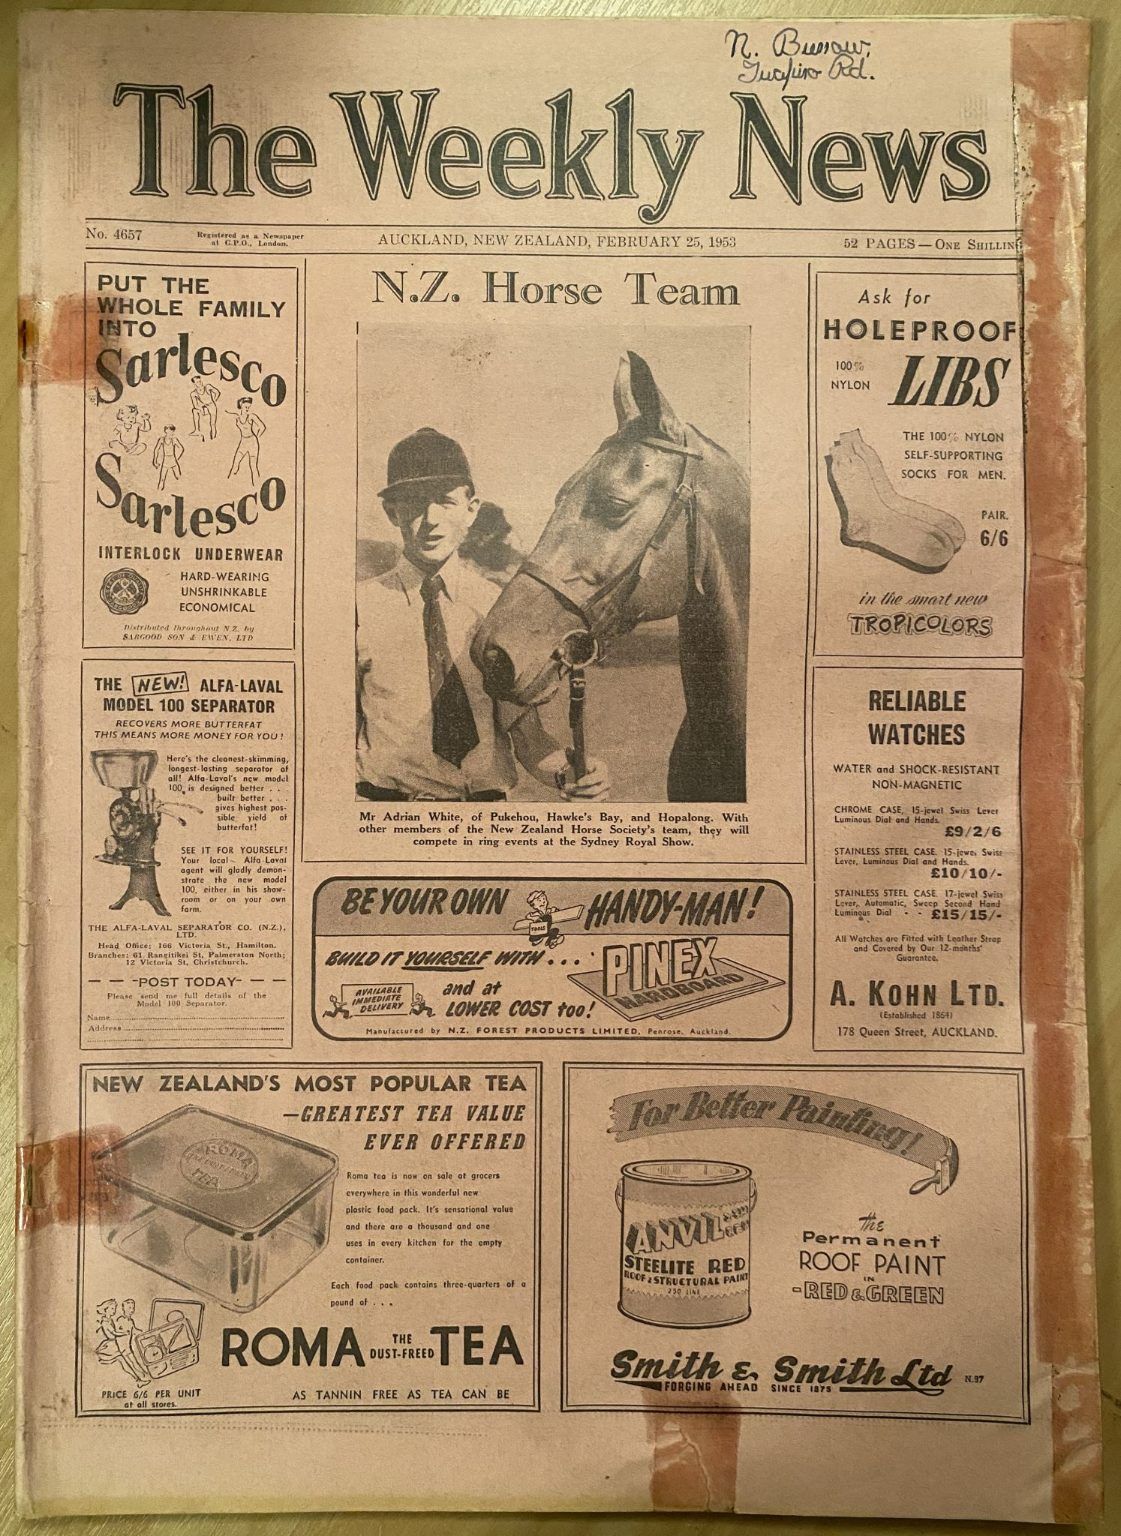 OLD NEWSPAPER: The Weekly News - No. 4657, 25 Feburary 1953